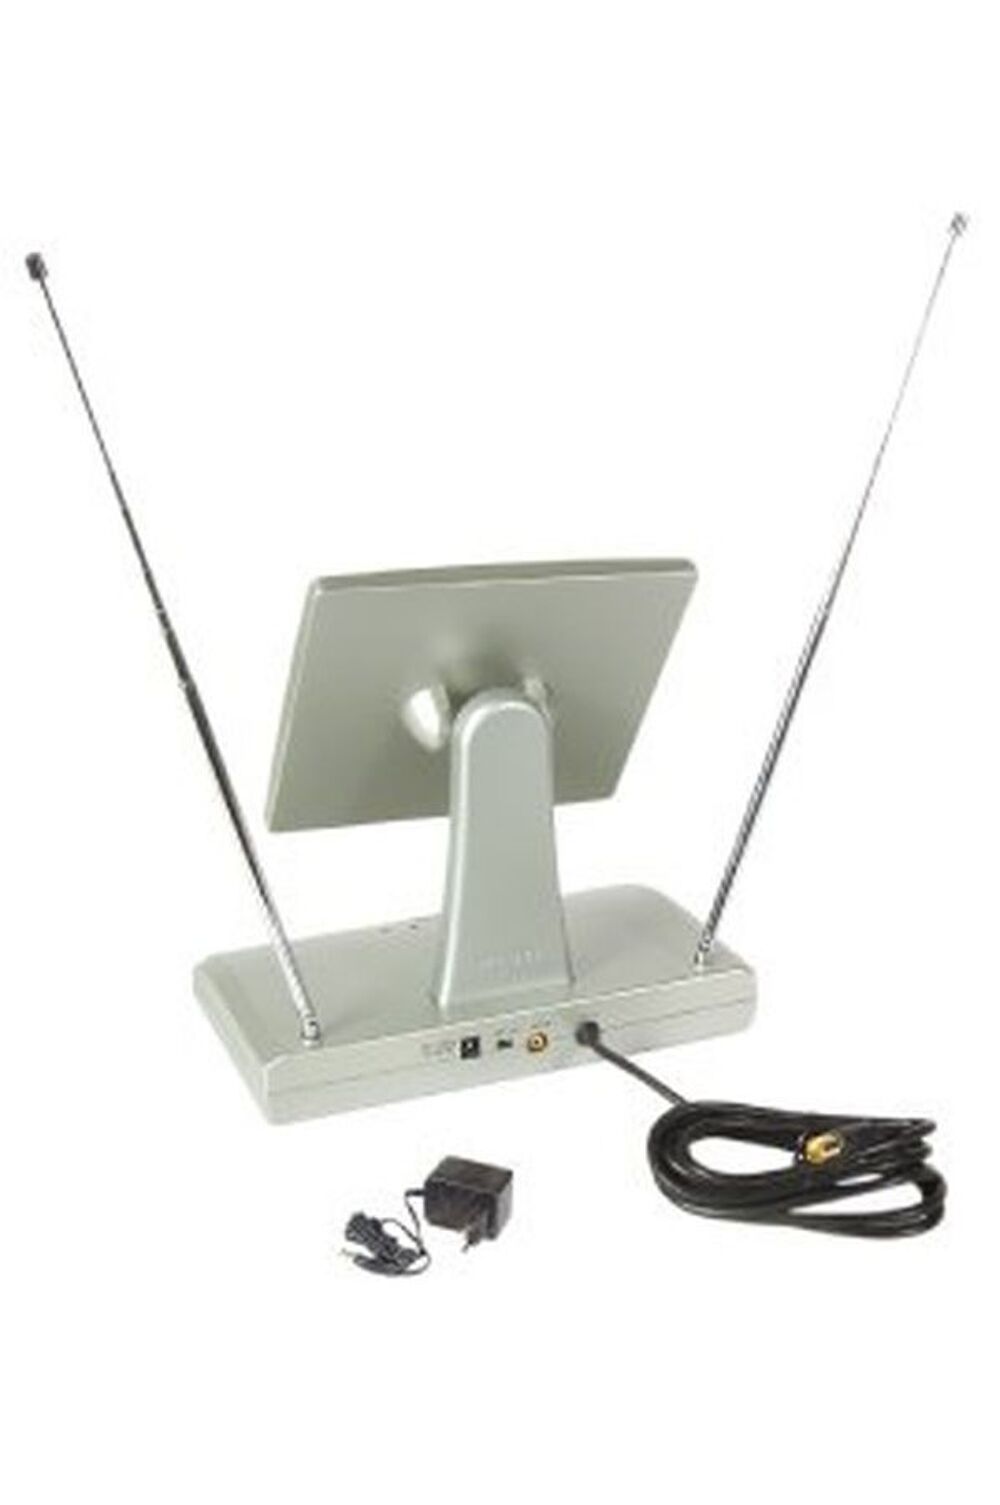  Antenne amplifi&eacute;e Philips 46dB UHF / VHF / FM Photos/Video/TV